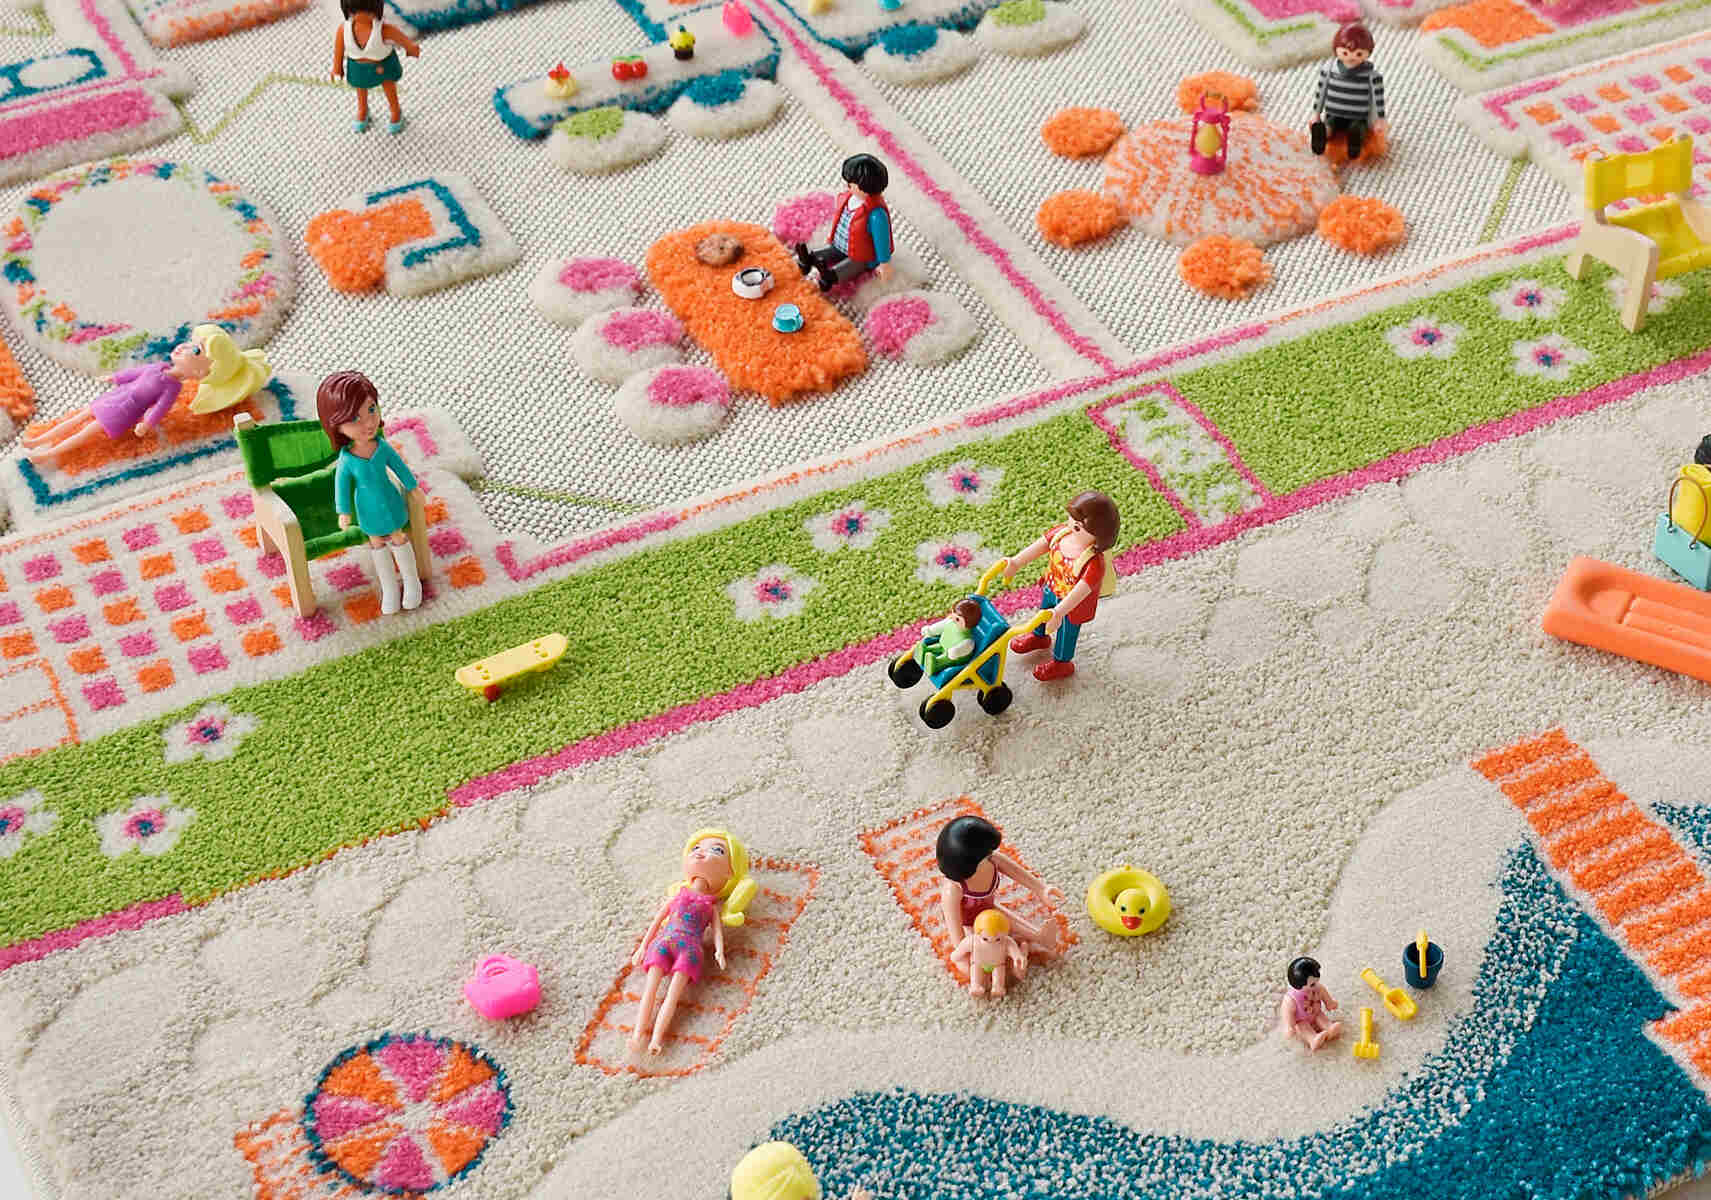 IVI 3D Play Carpet, Beach Playhouse design - Medium Size